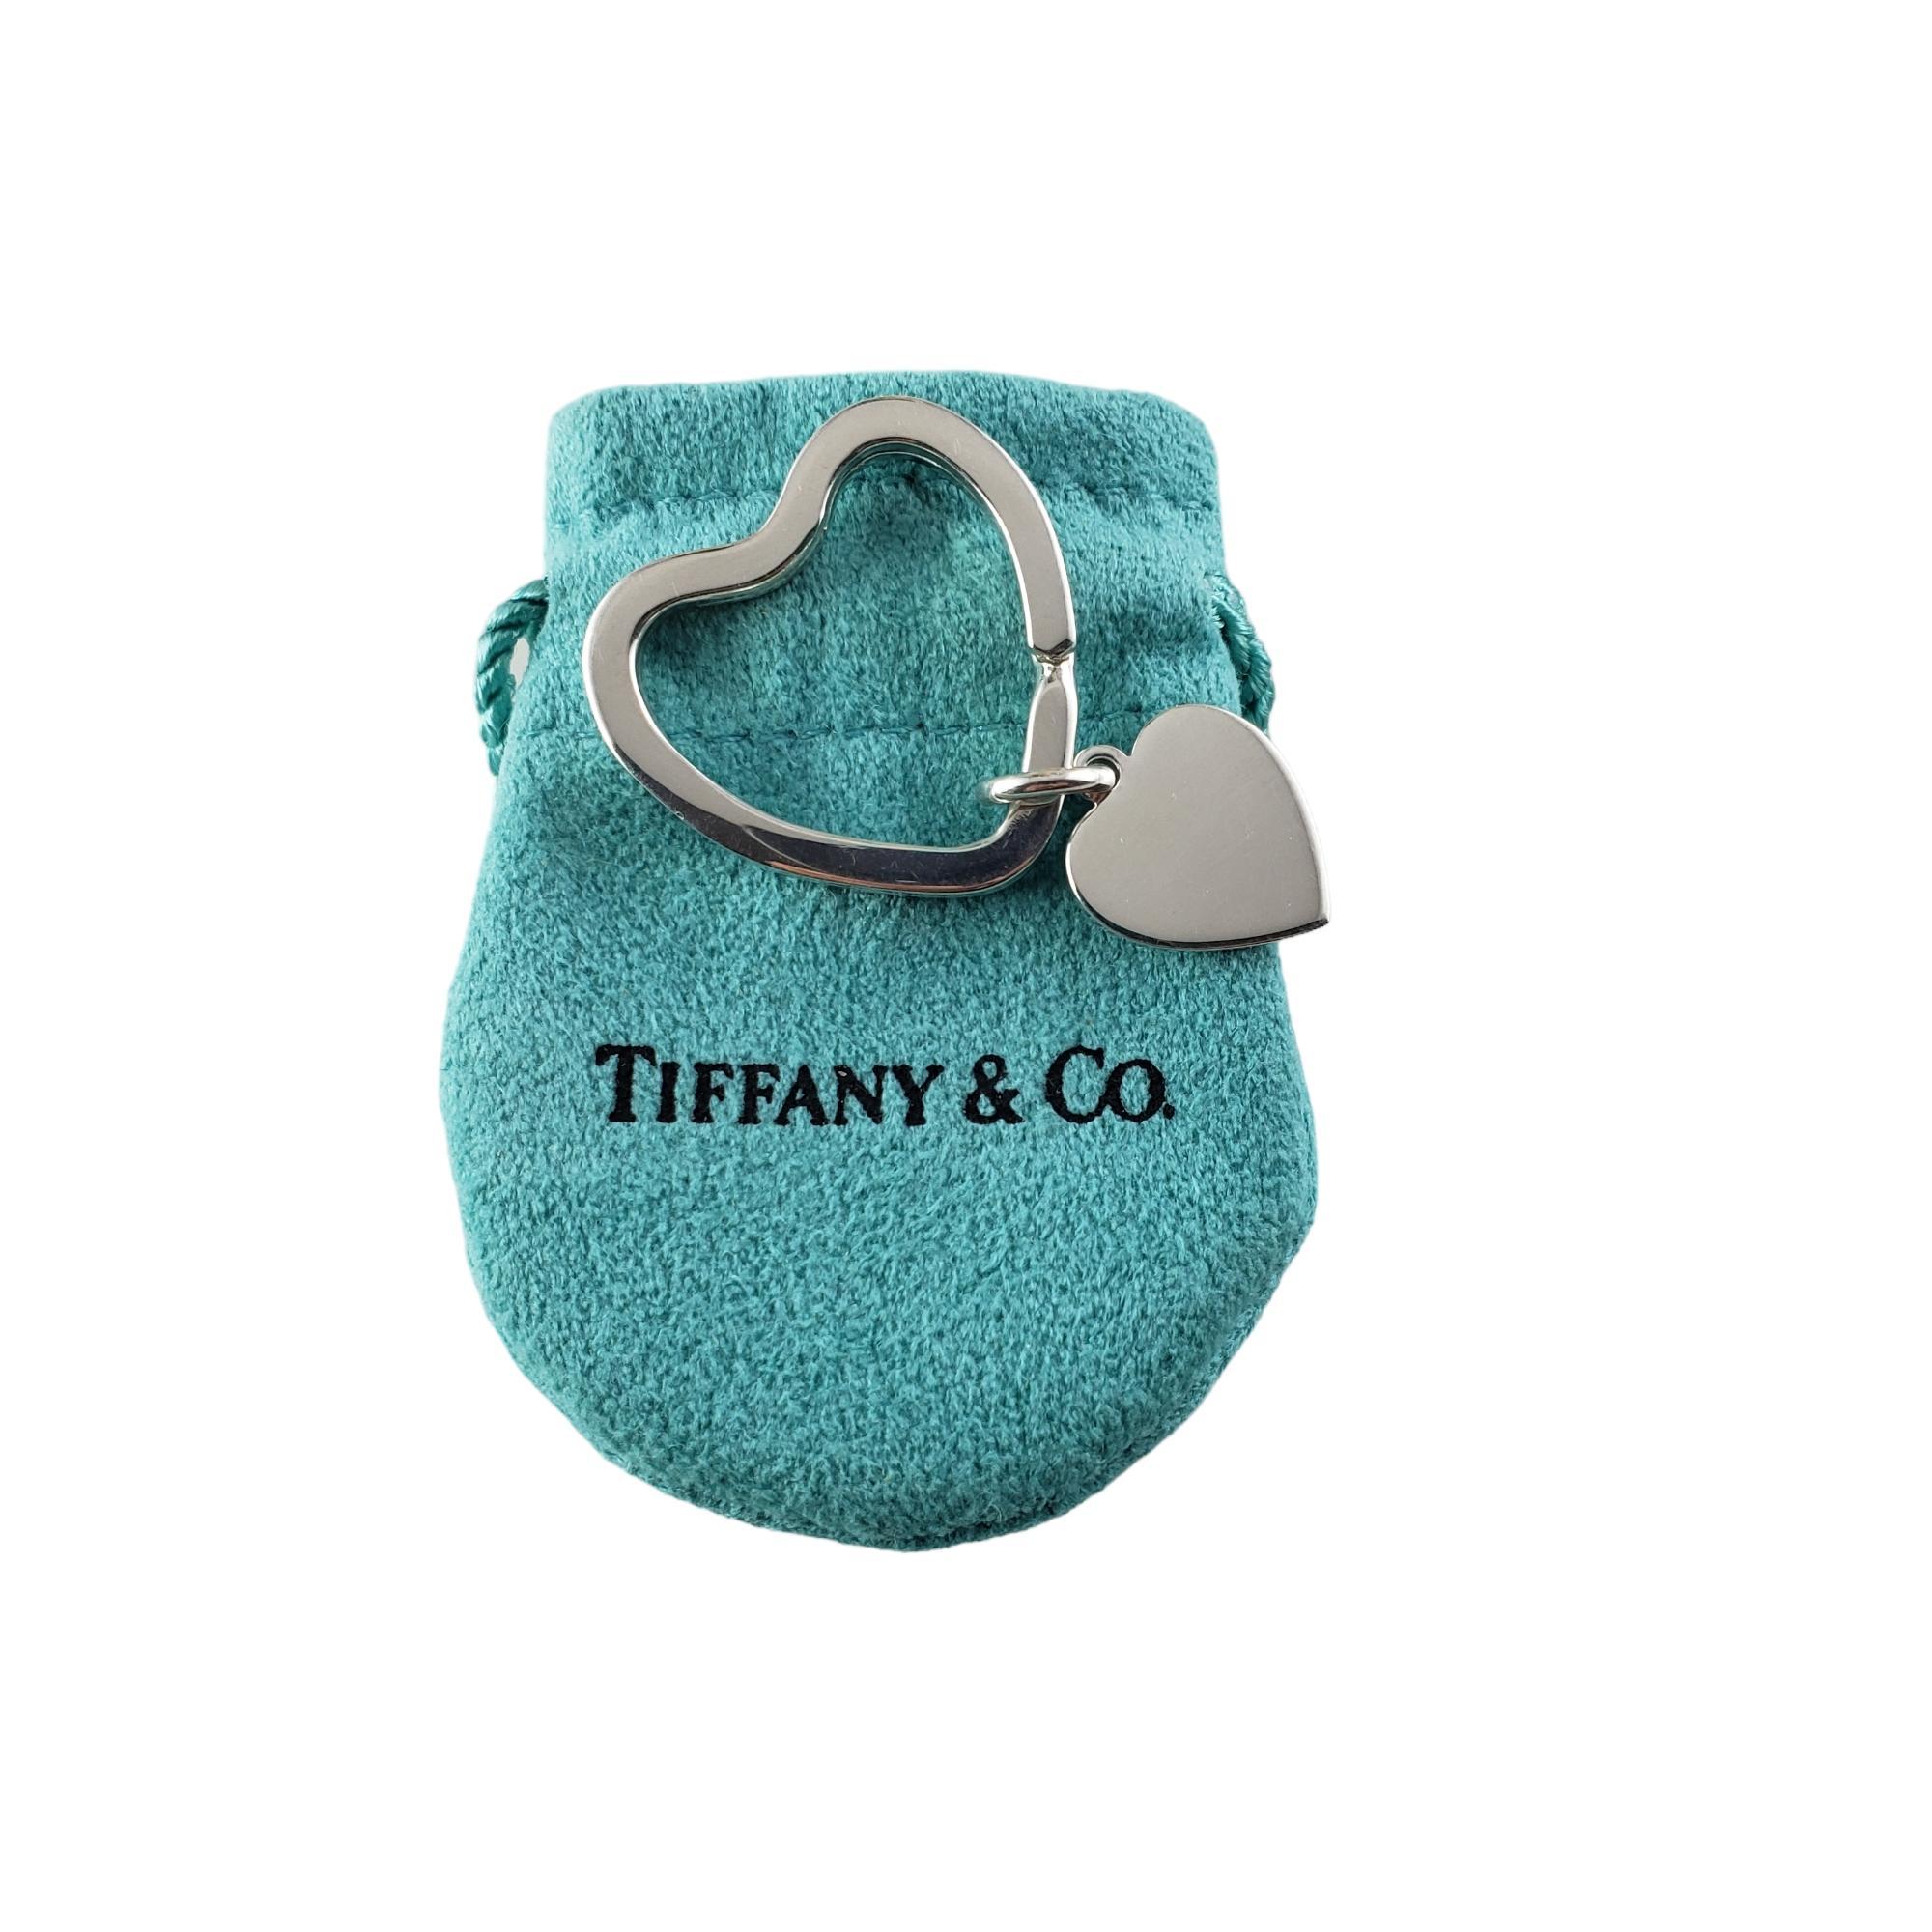 Vintage Tiffany & Co. Sterling Silver Heart Key Ring #15400 1